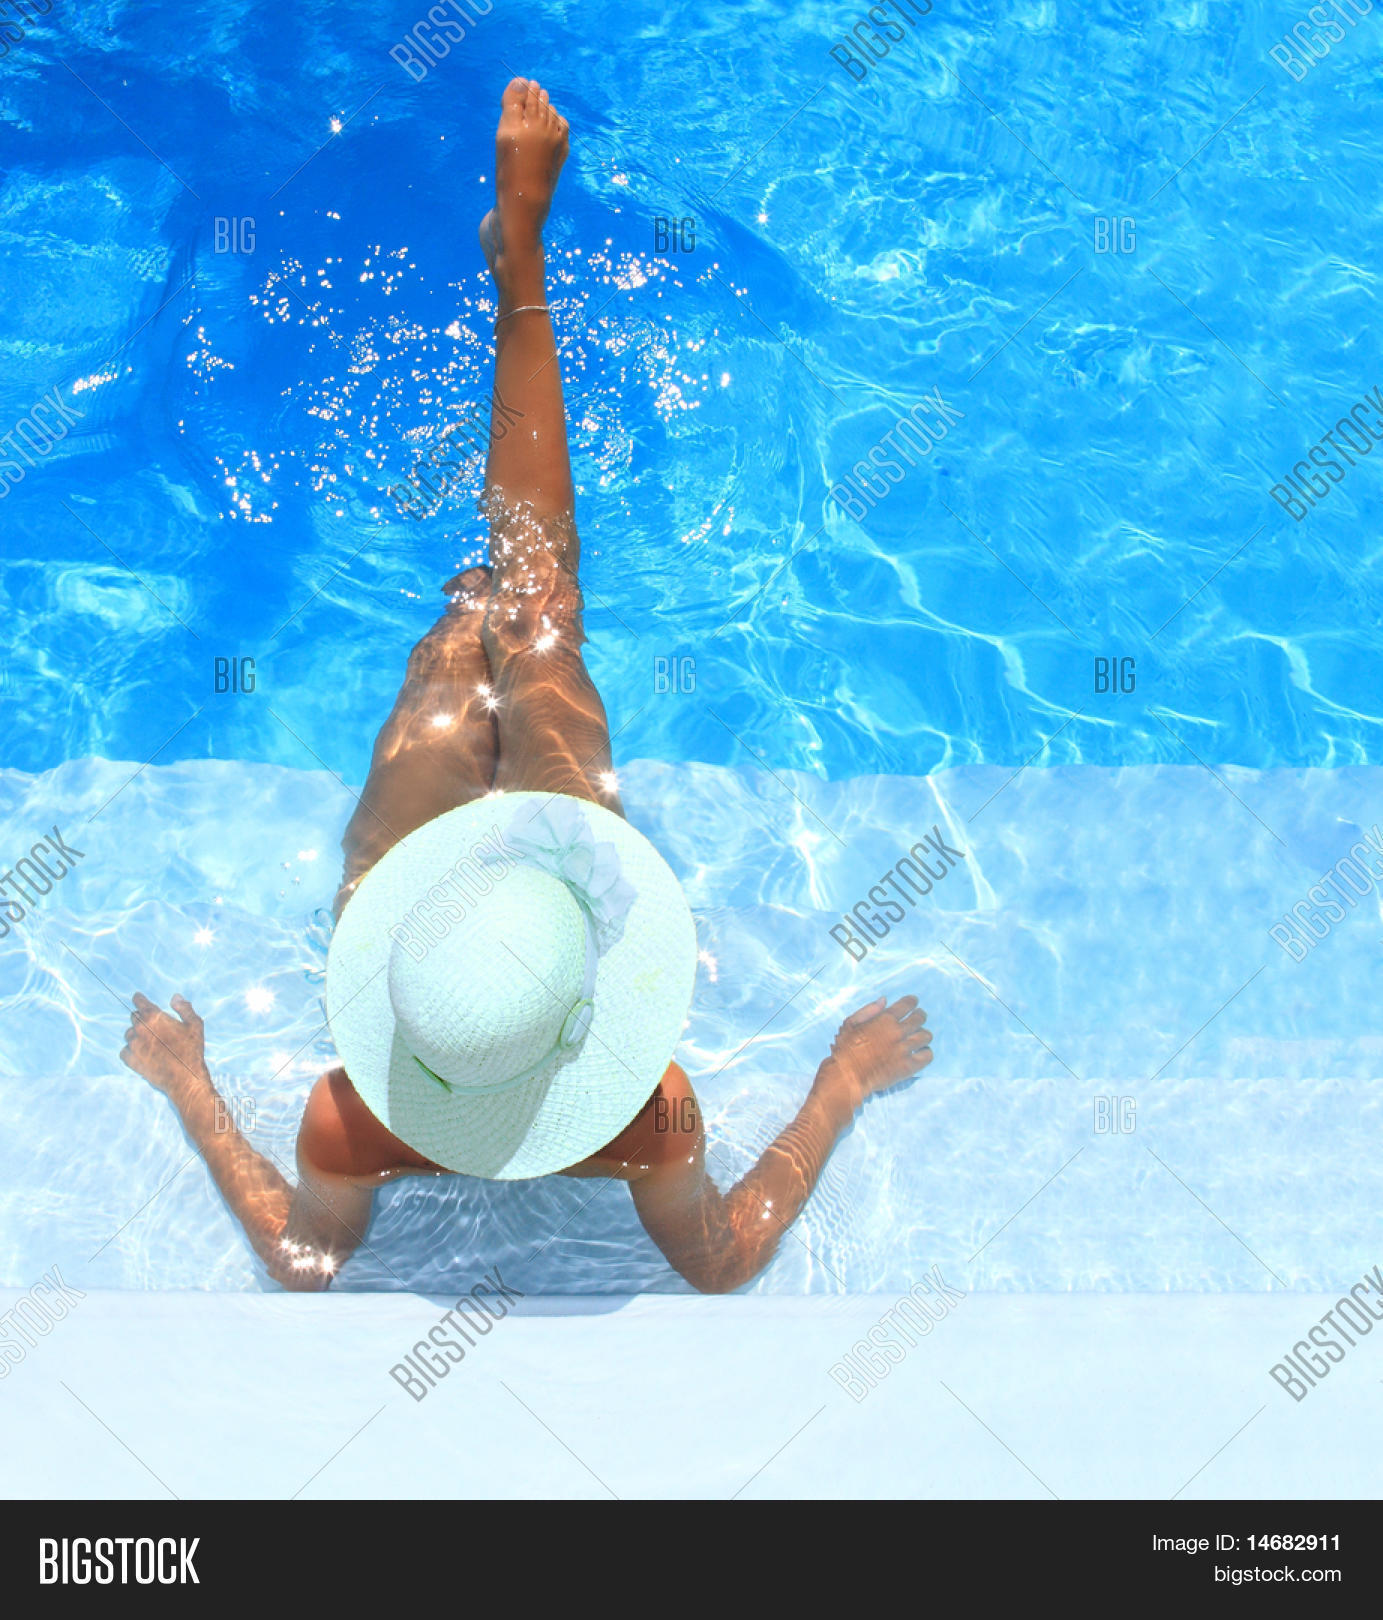 Pretty Blonde Woman Enjoying a Swimming Pool in Greece Image ...